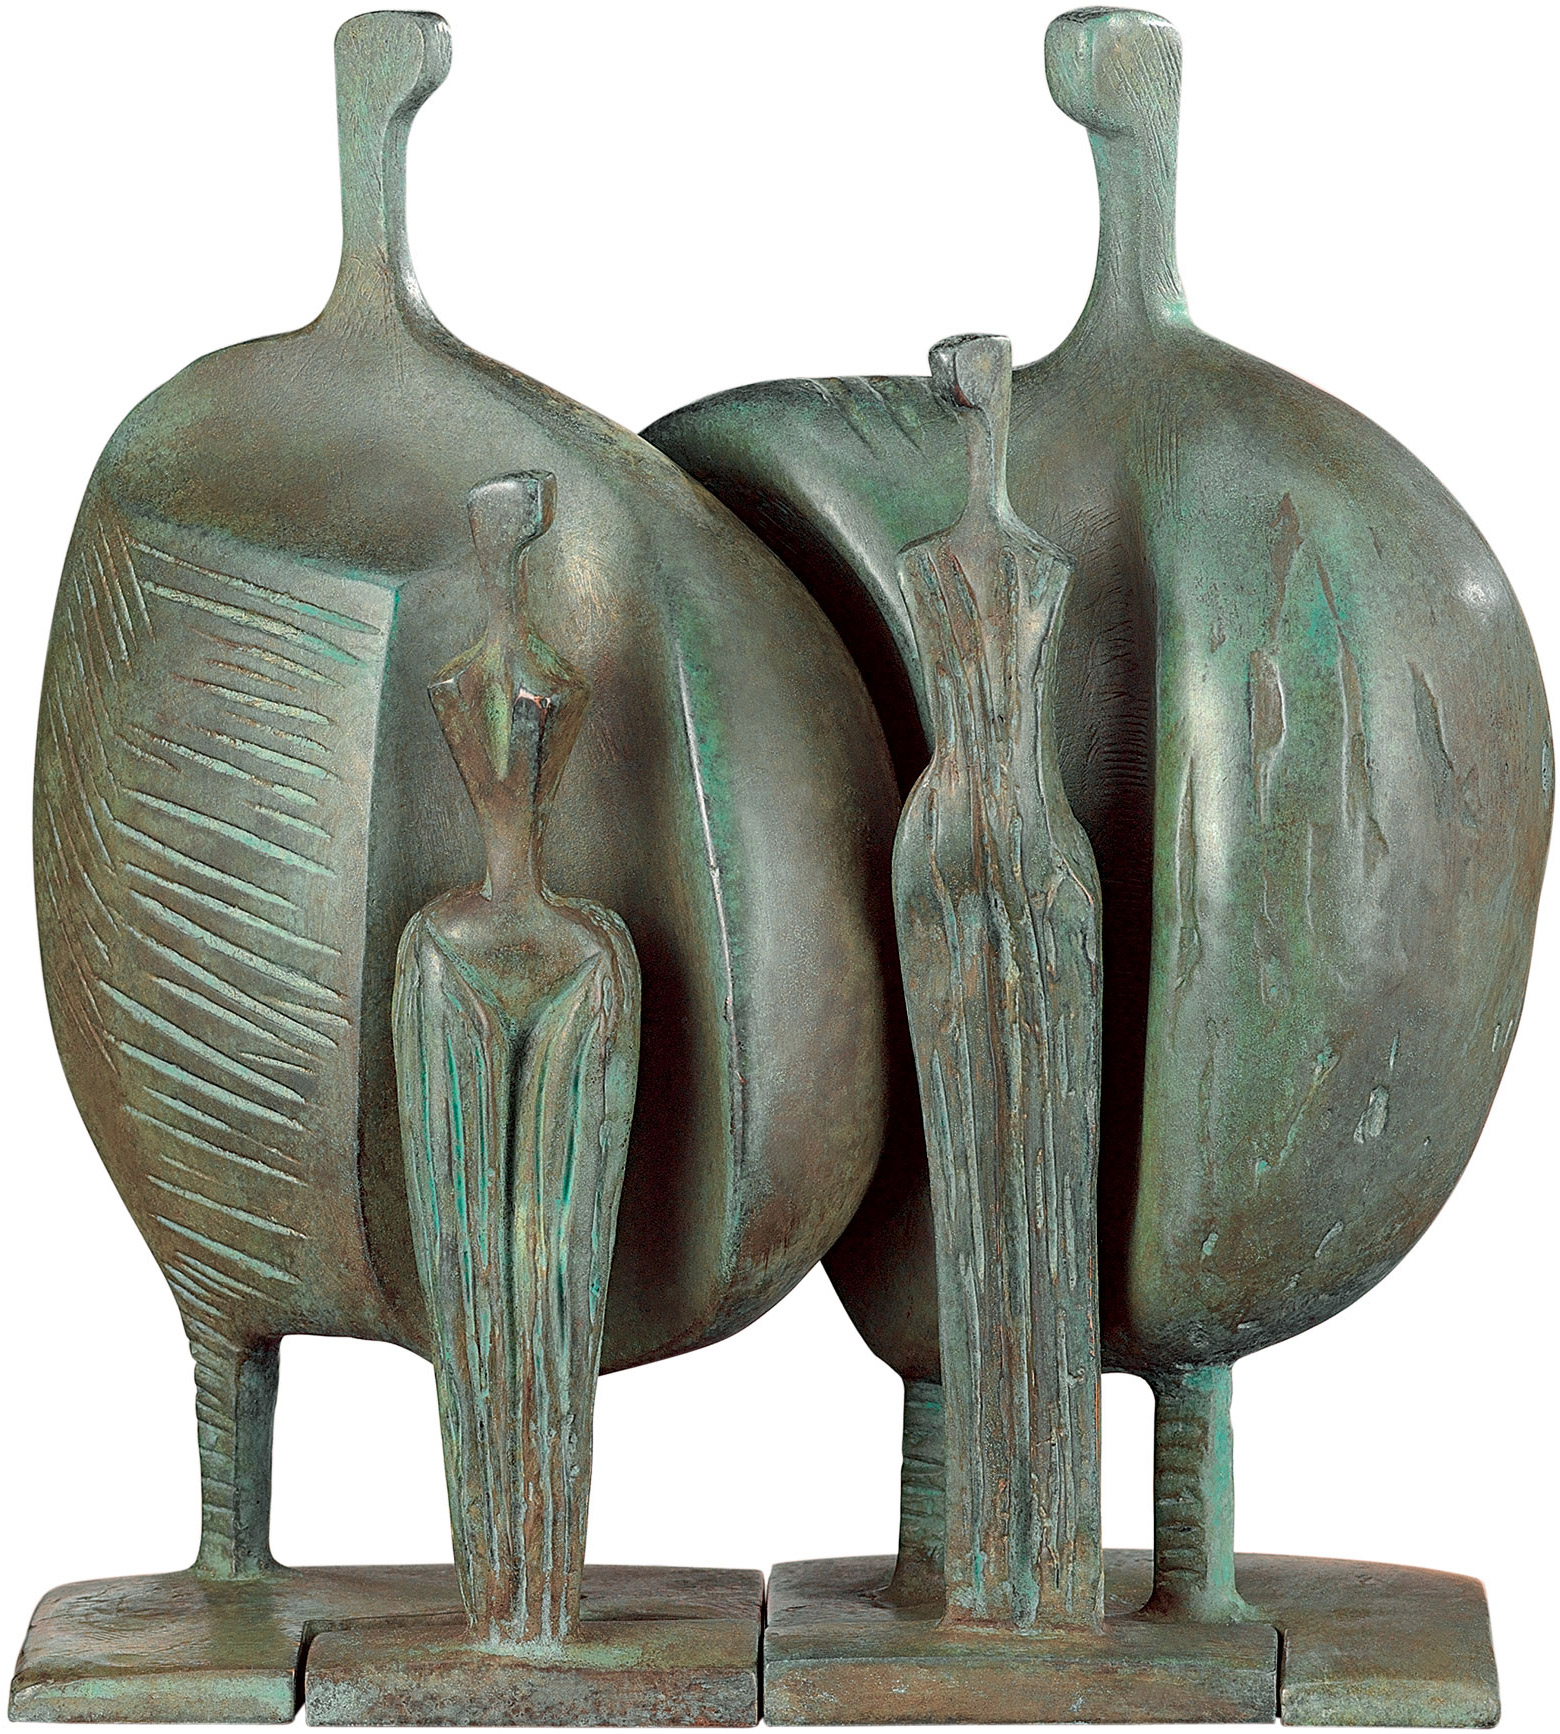 Skulpturengruppe "La Familia", Version in Bronze von Itzik Benshalom